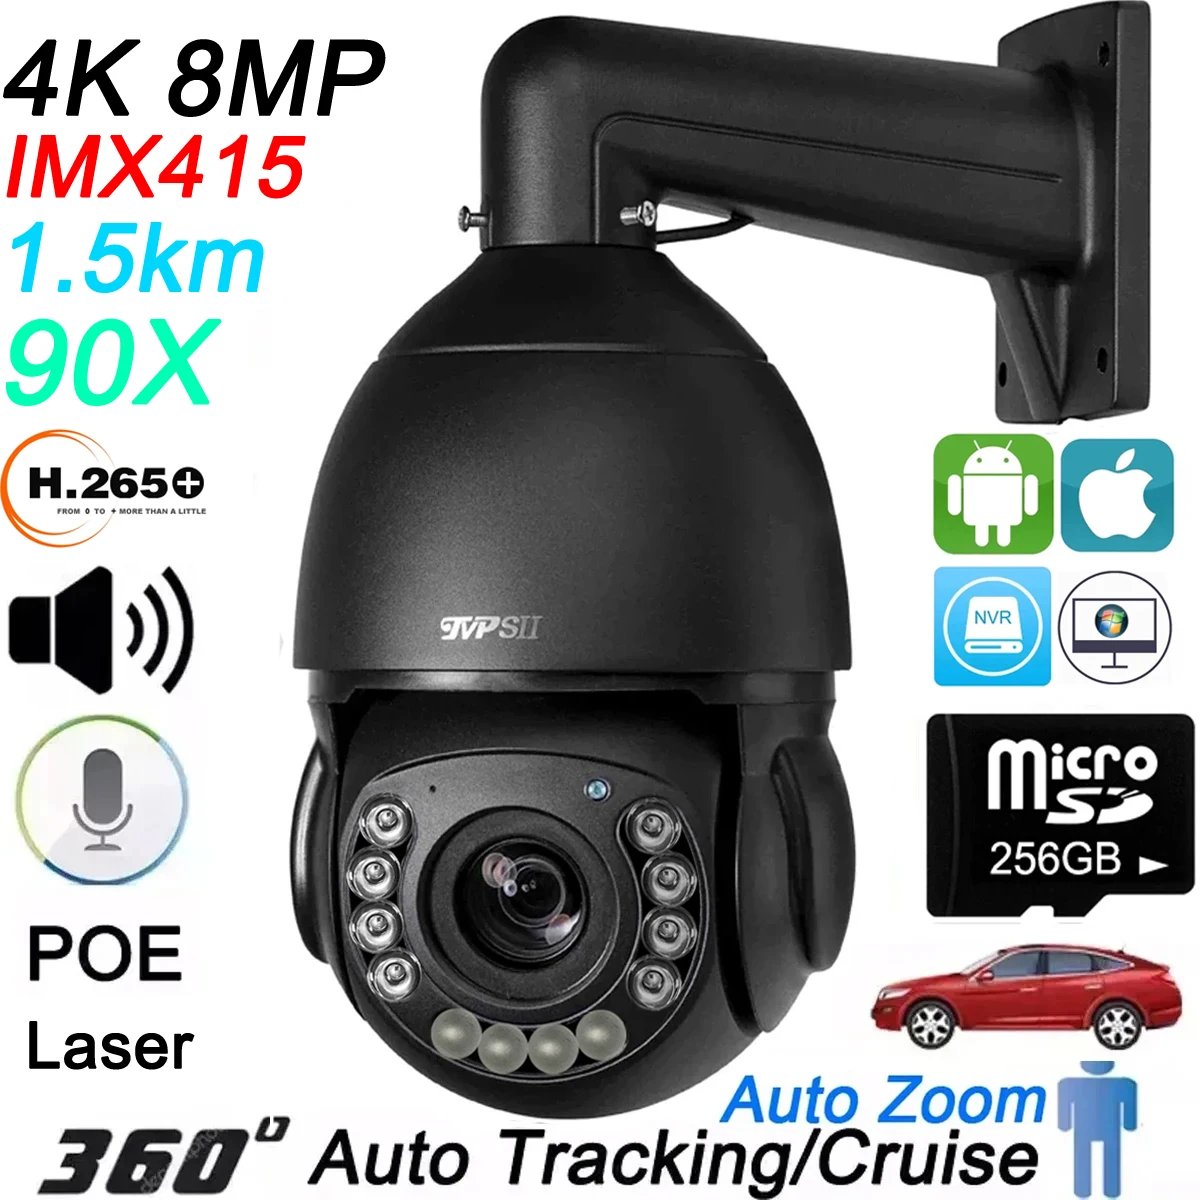 Black 256gb Auto Tracking 8MP 4K IMX415 54X 90X Optical Zoom 360° Audio Outdoor ONVIF IP POE PTZ Speed Doom Surveillance Camera